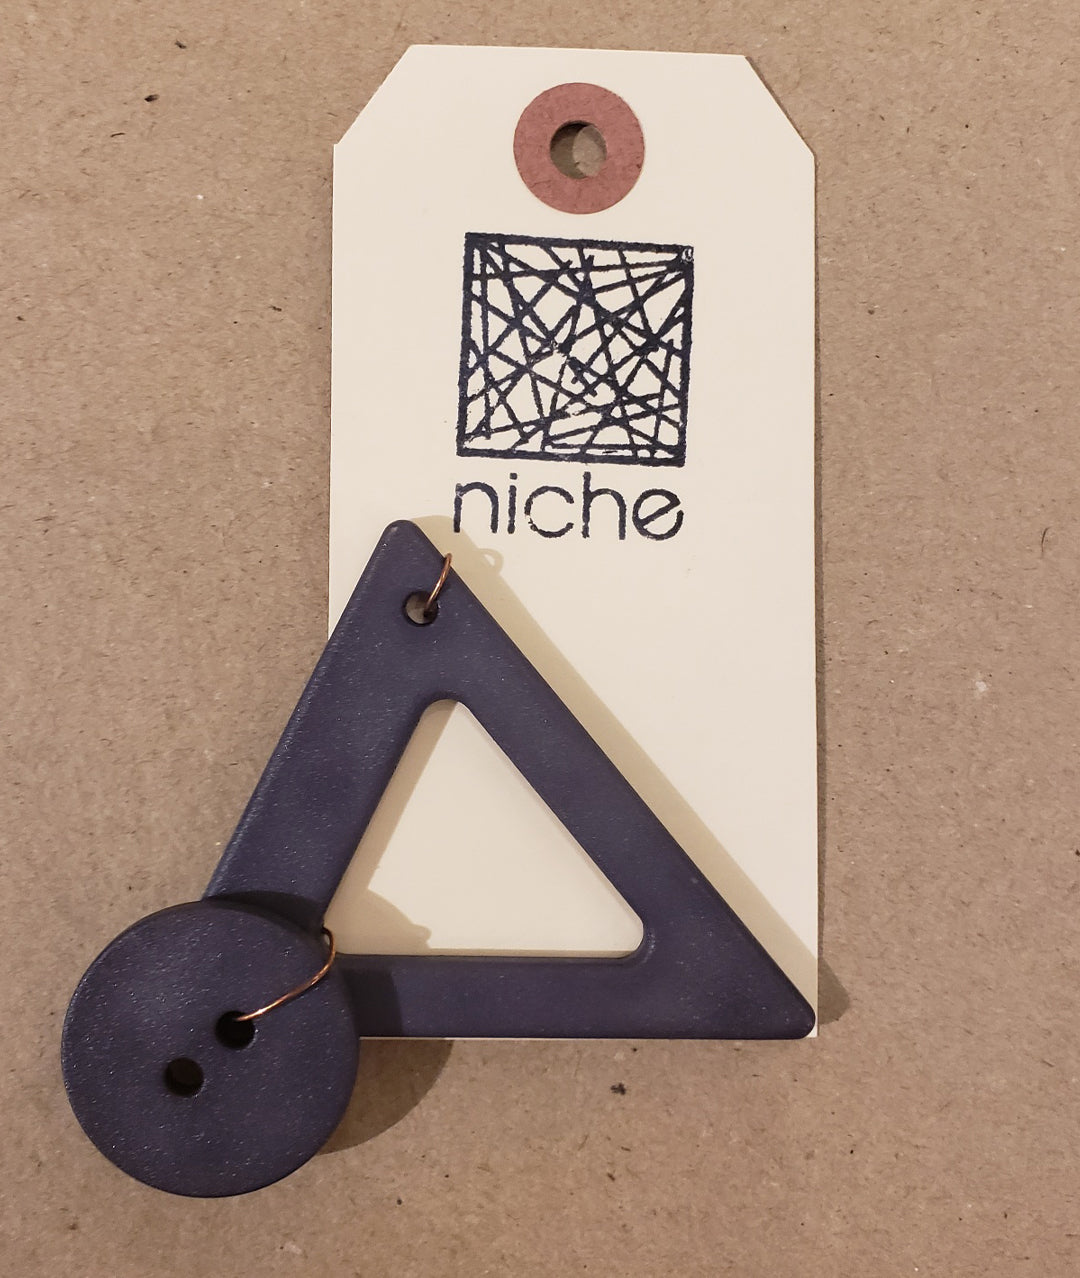 purple triangular button on a Niche card